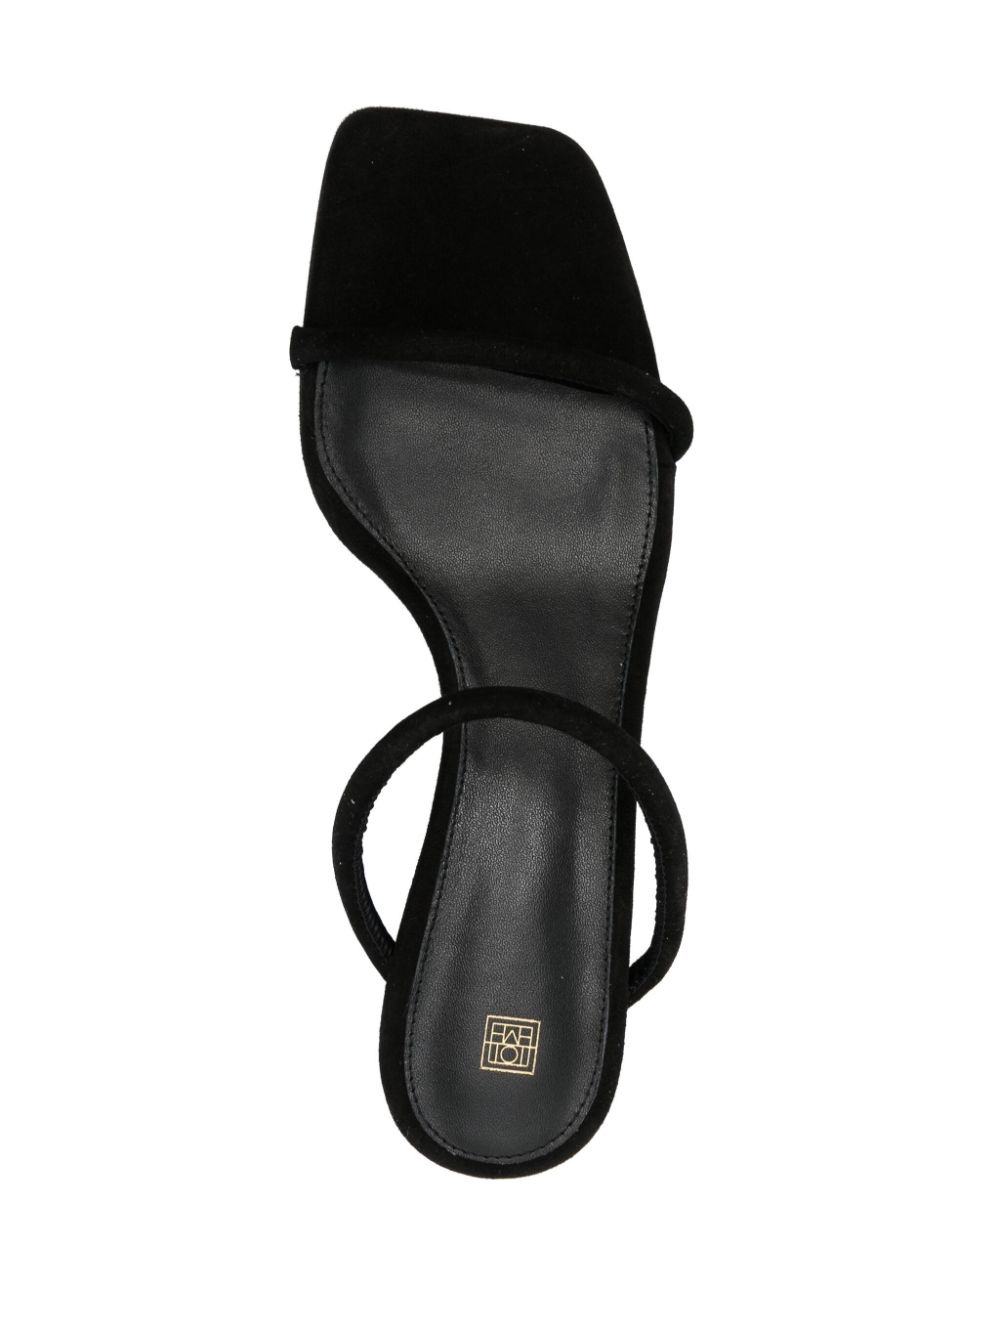 The minimalist leather sandals - 2